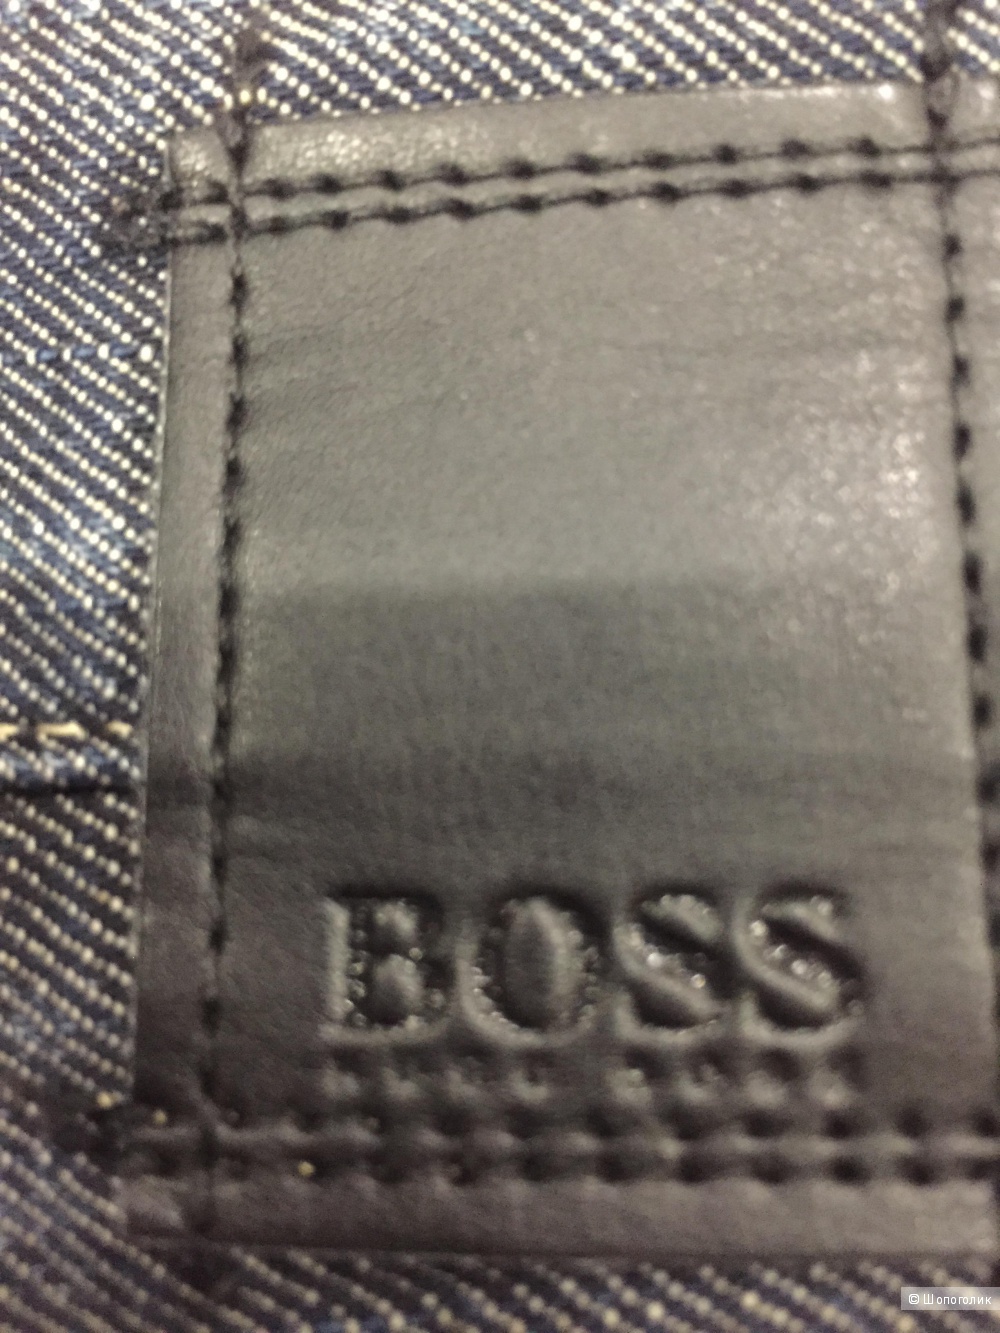 Мужские джинсы Hugo Boss,размер XL